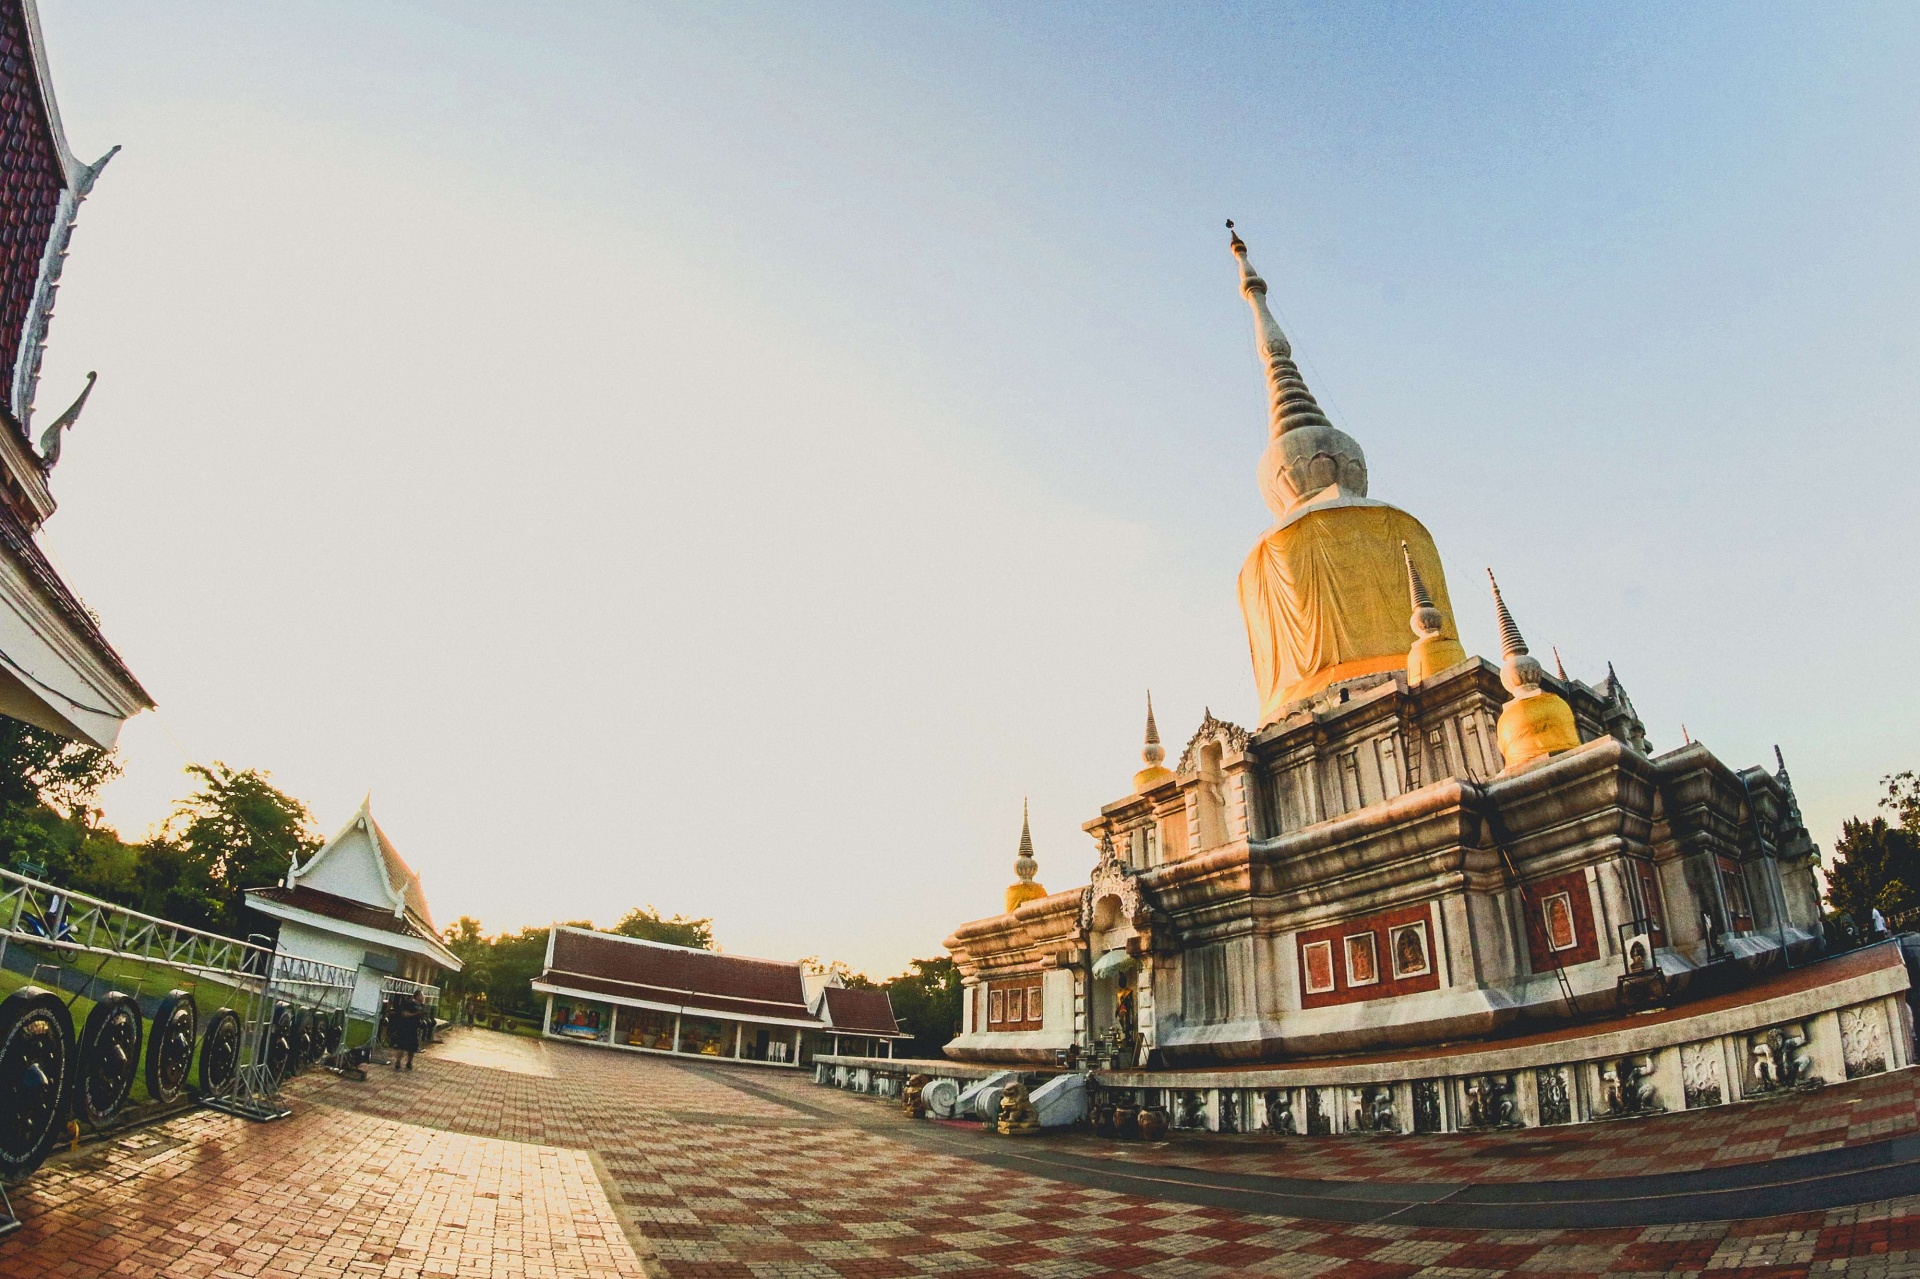 Phra That Nadoon Stupa At Mahasarakham